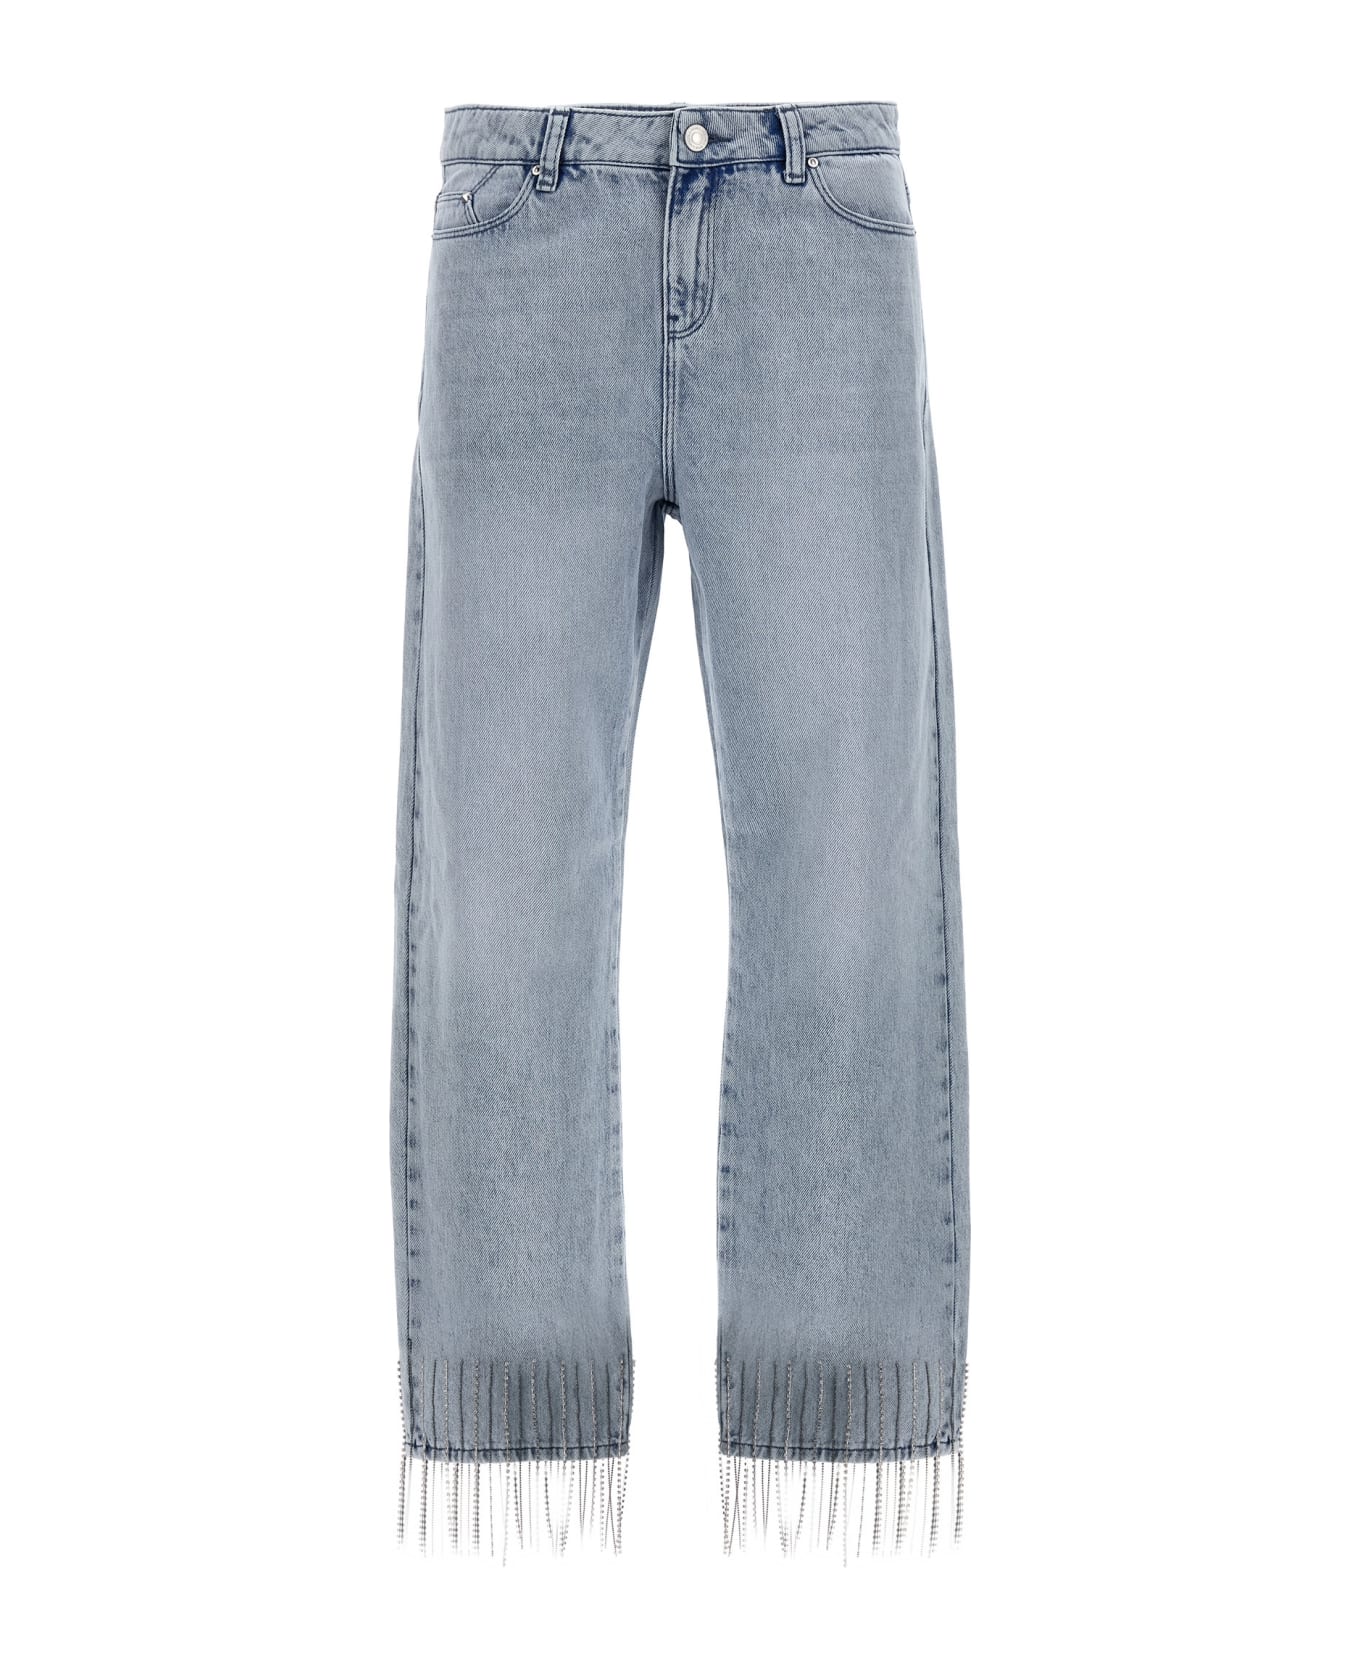 Karl Lagerfeld Rhinestone Fringed Jeans - Light Blue デニム